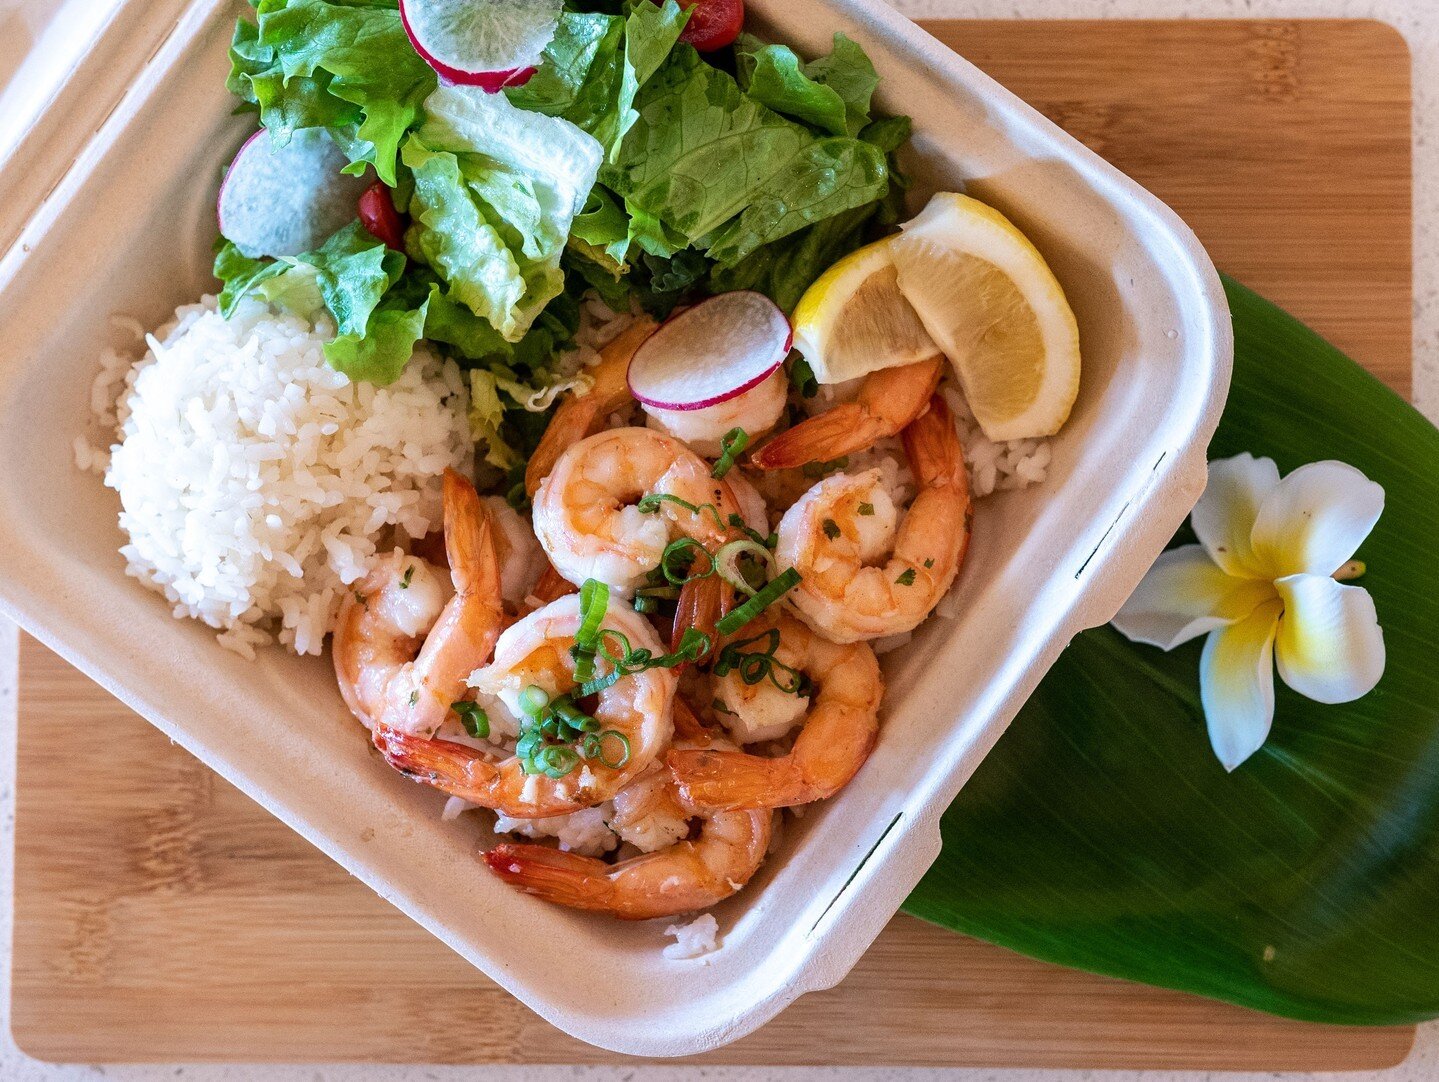 Bright and full of lemon and garlic flavors, our Shrimp Truck plate is sure to please. 

Available from 10:30am-8:30pm. 

#KilaueaMarketCafe #Kauai #KilaueaKauai #KauaiNorthShore #KauaiFoodie #Lunch #PlateLunch